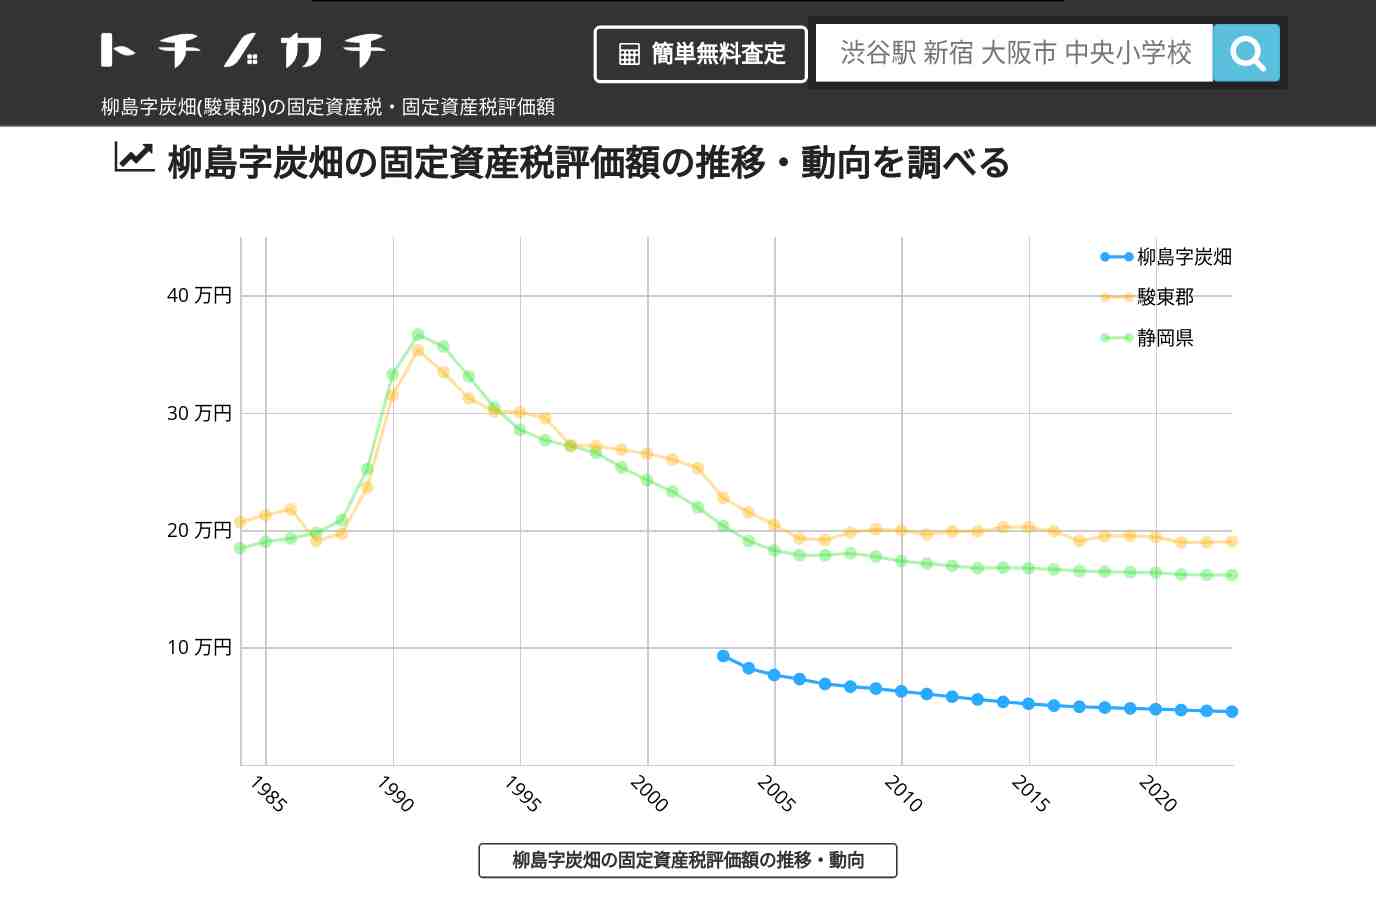 柳島字炭畑(駿東郡)の固定資産税・固定資産税評価額 | トチノカチ